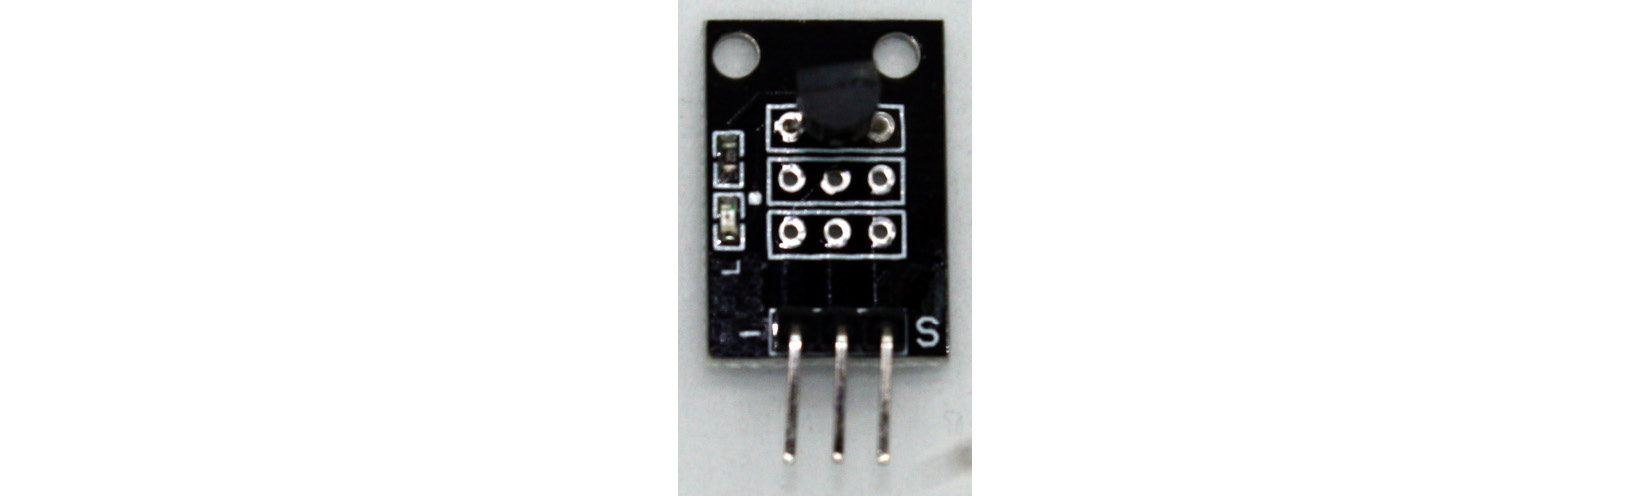 Figure 9.1 – DS18B20 digital temperature sensor breakout board